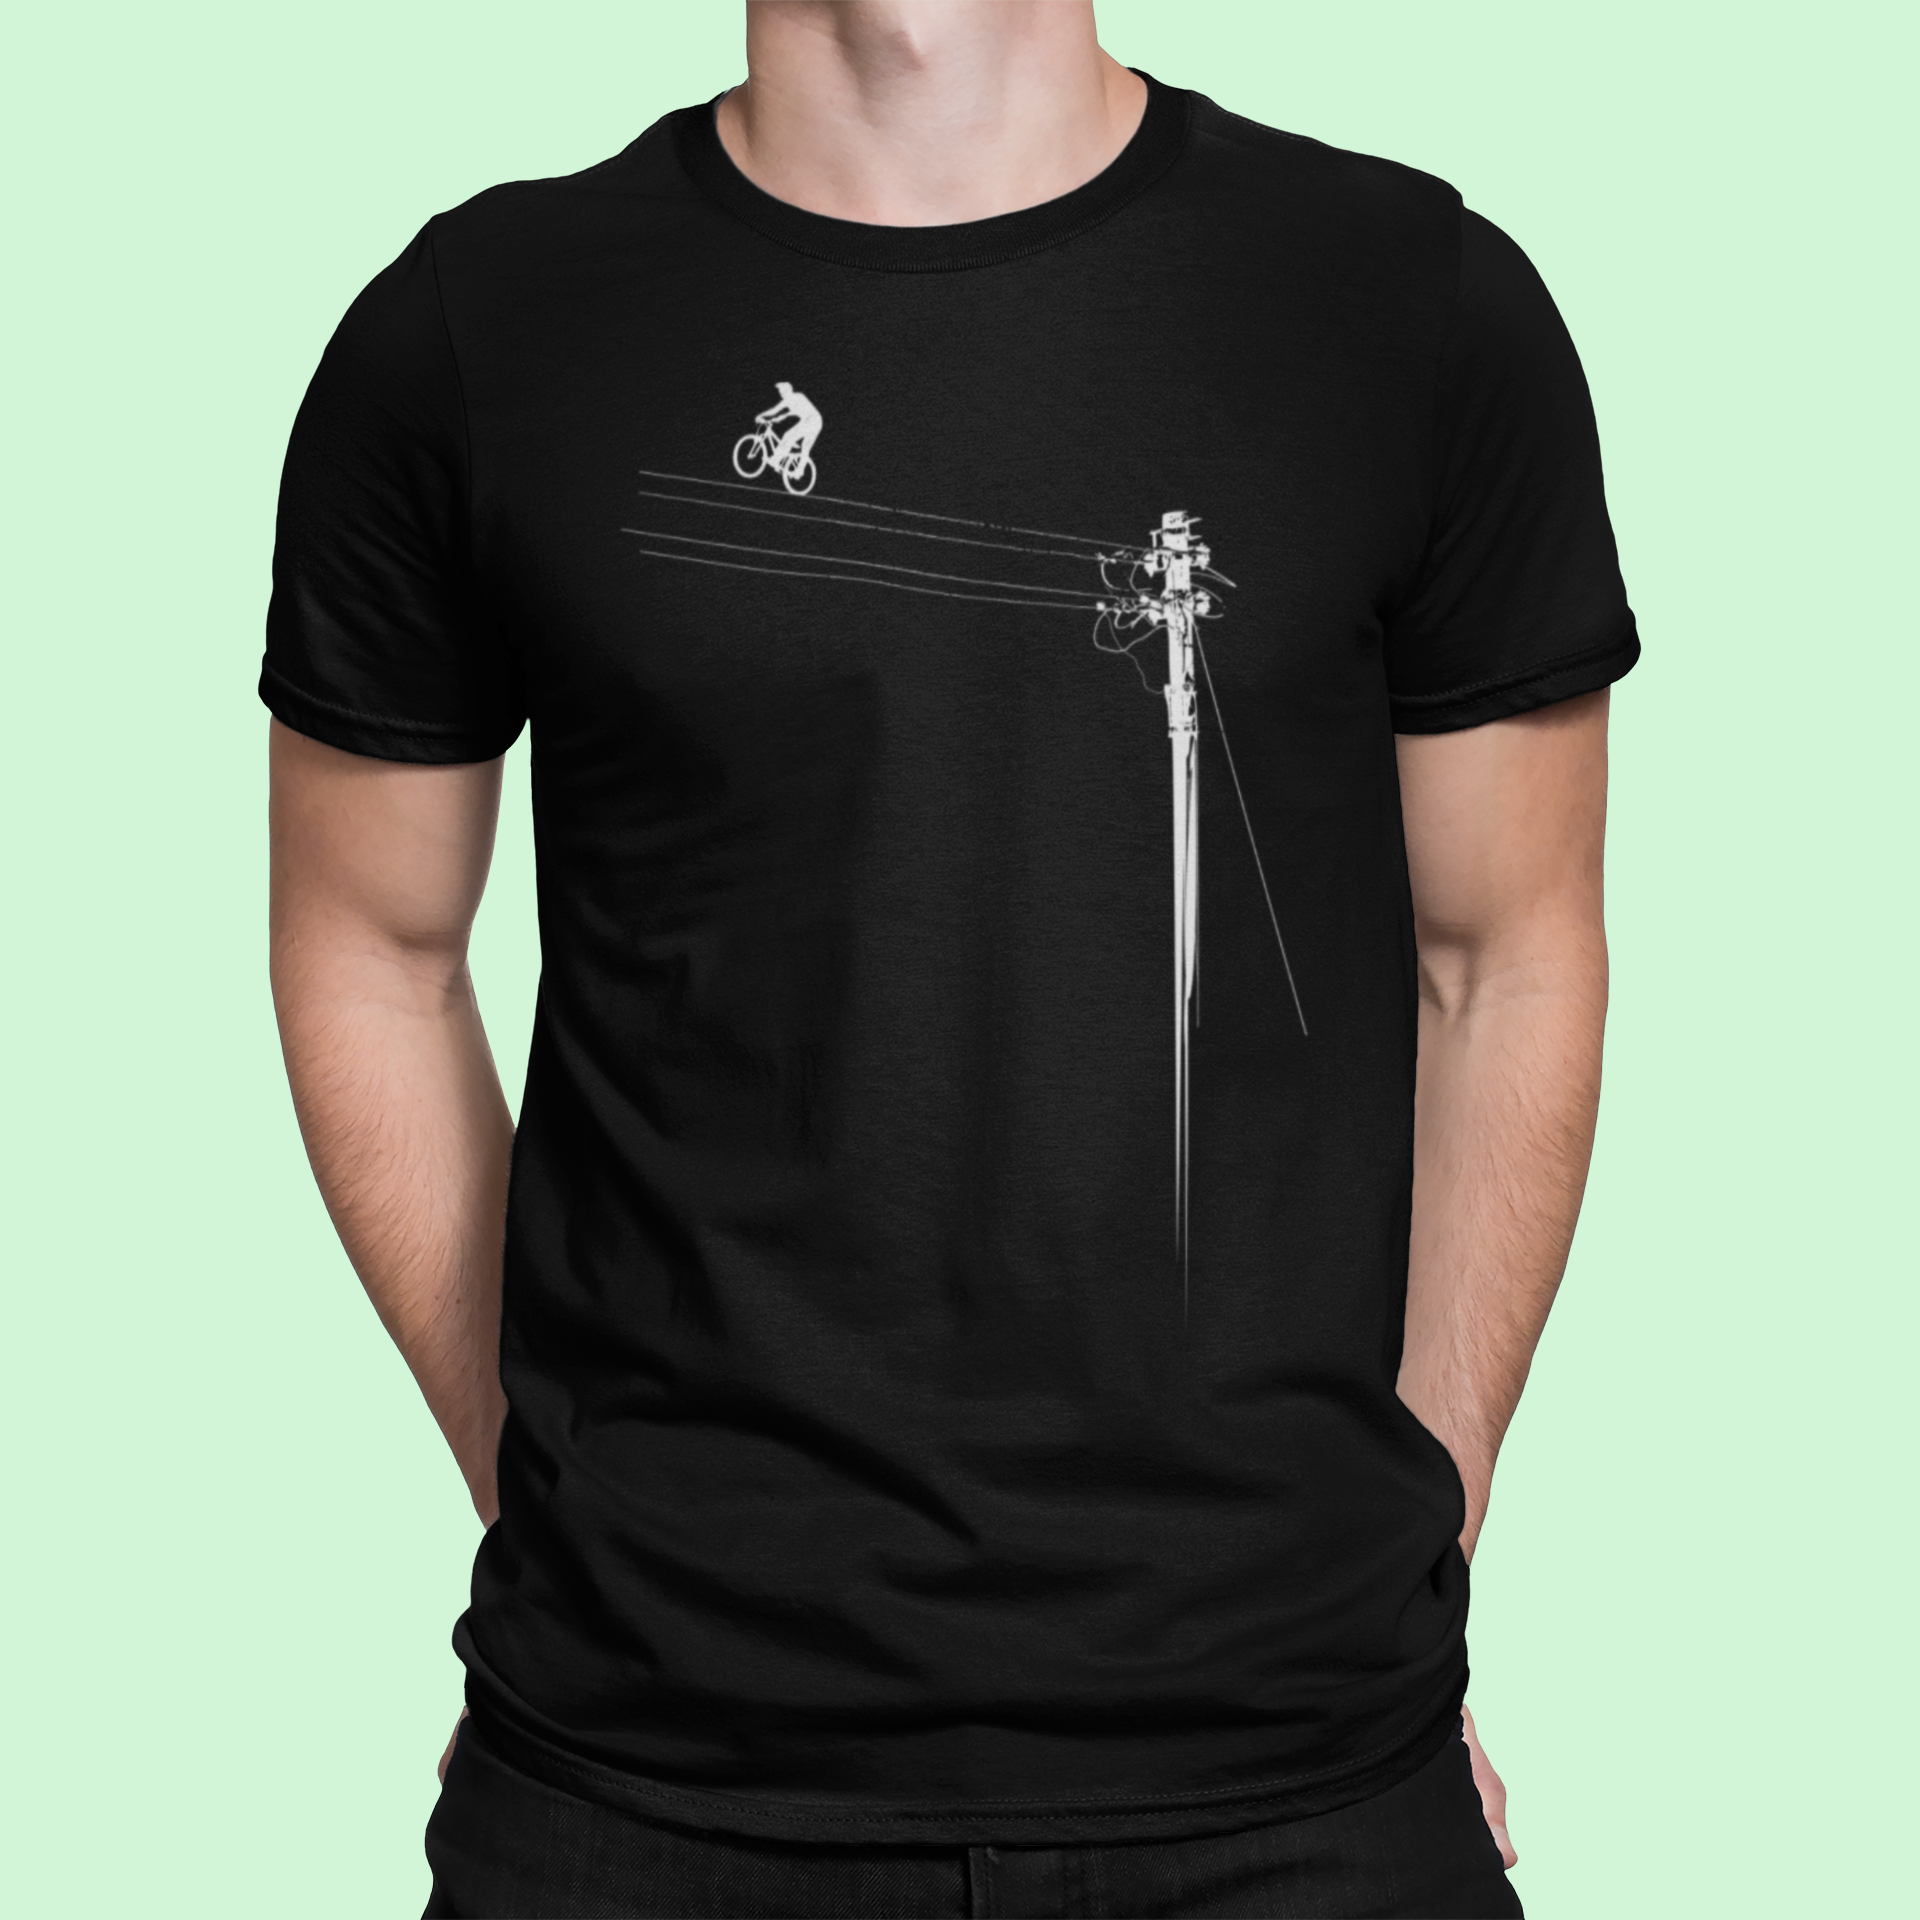 Electric Bike - Men's/Unisex T-shirt